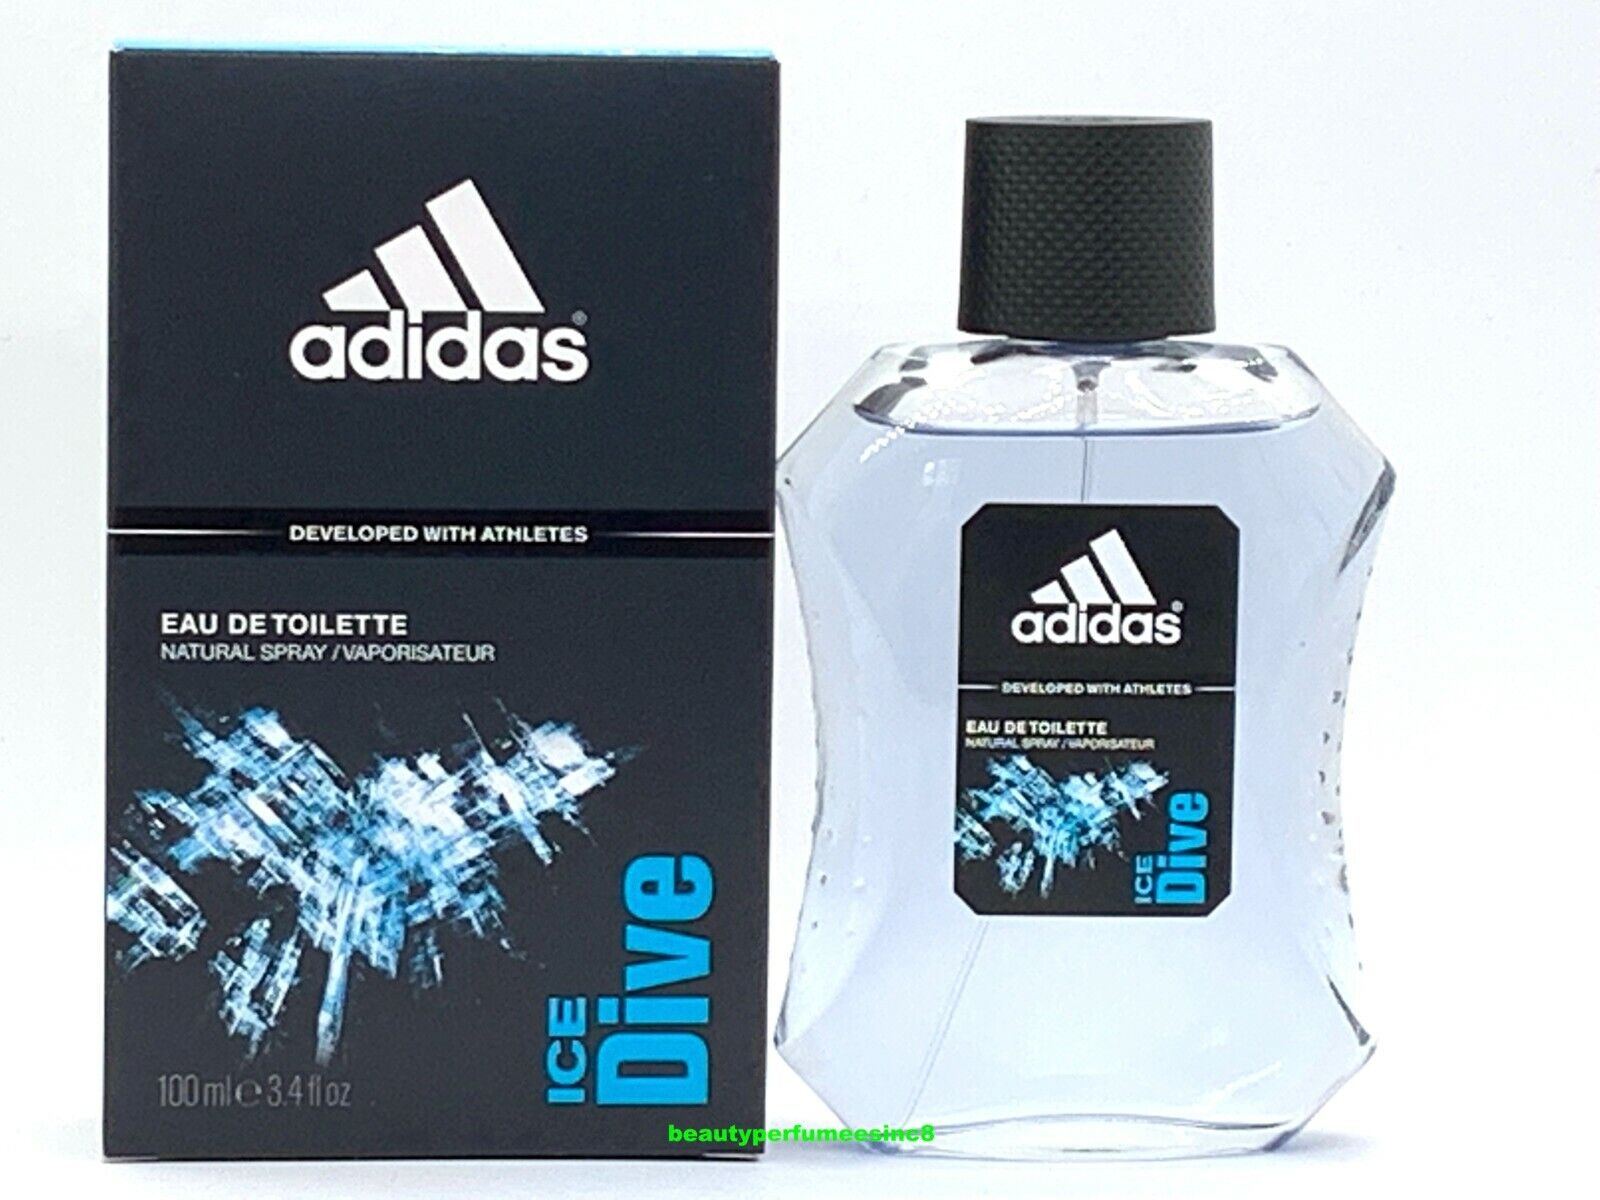 Adidas Ice Dive Perfume by Adidas 3.4 oz 100ml Eau de Toilette, Men\'s New in Box